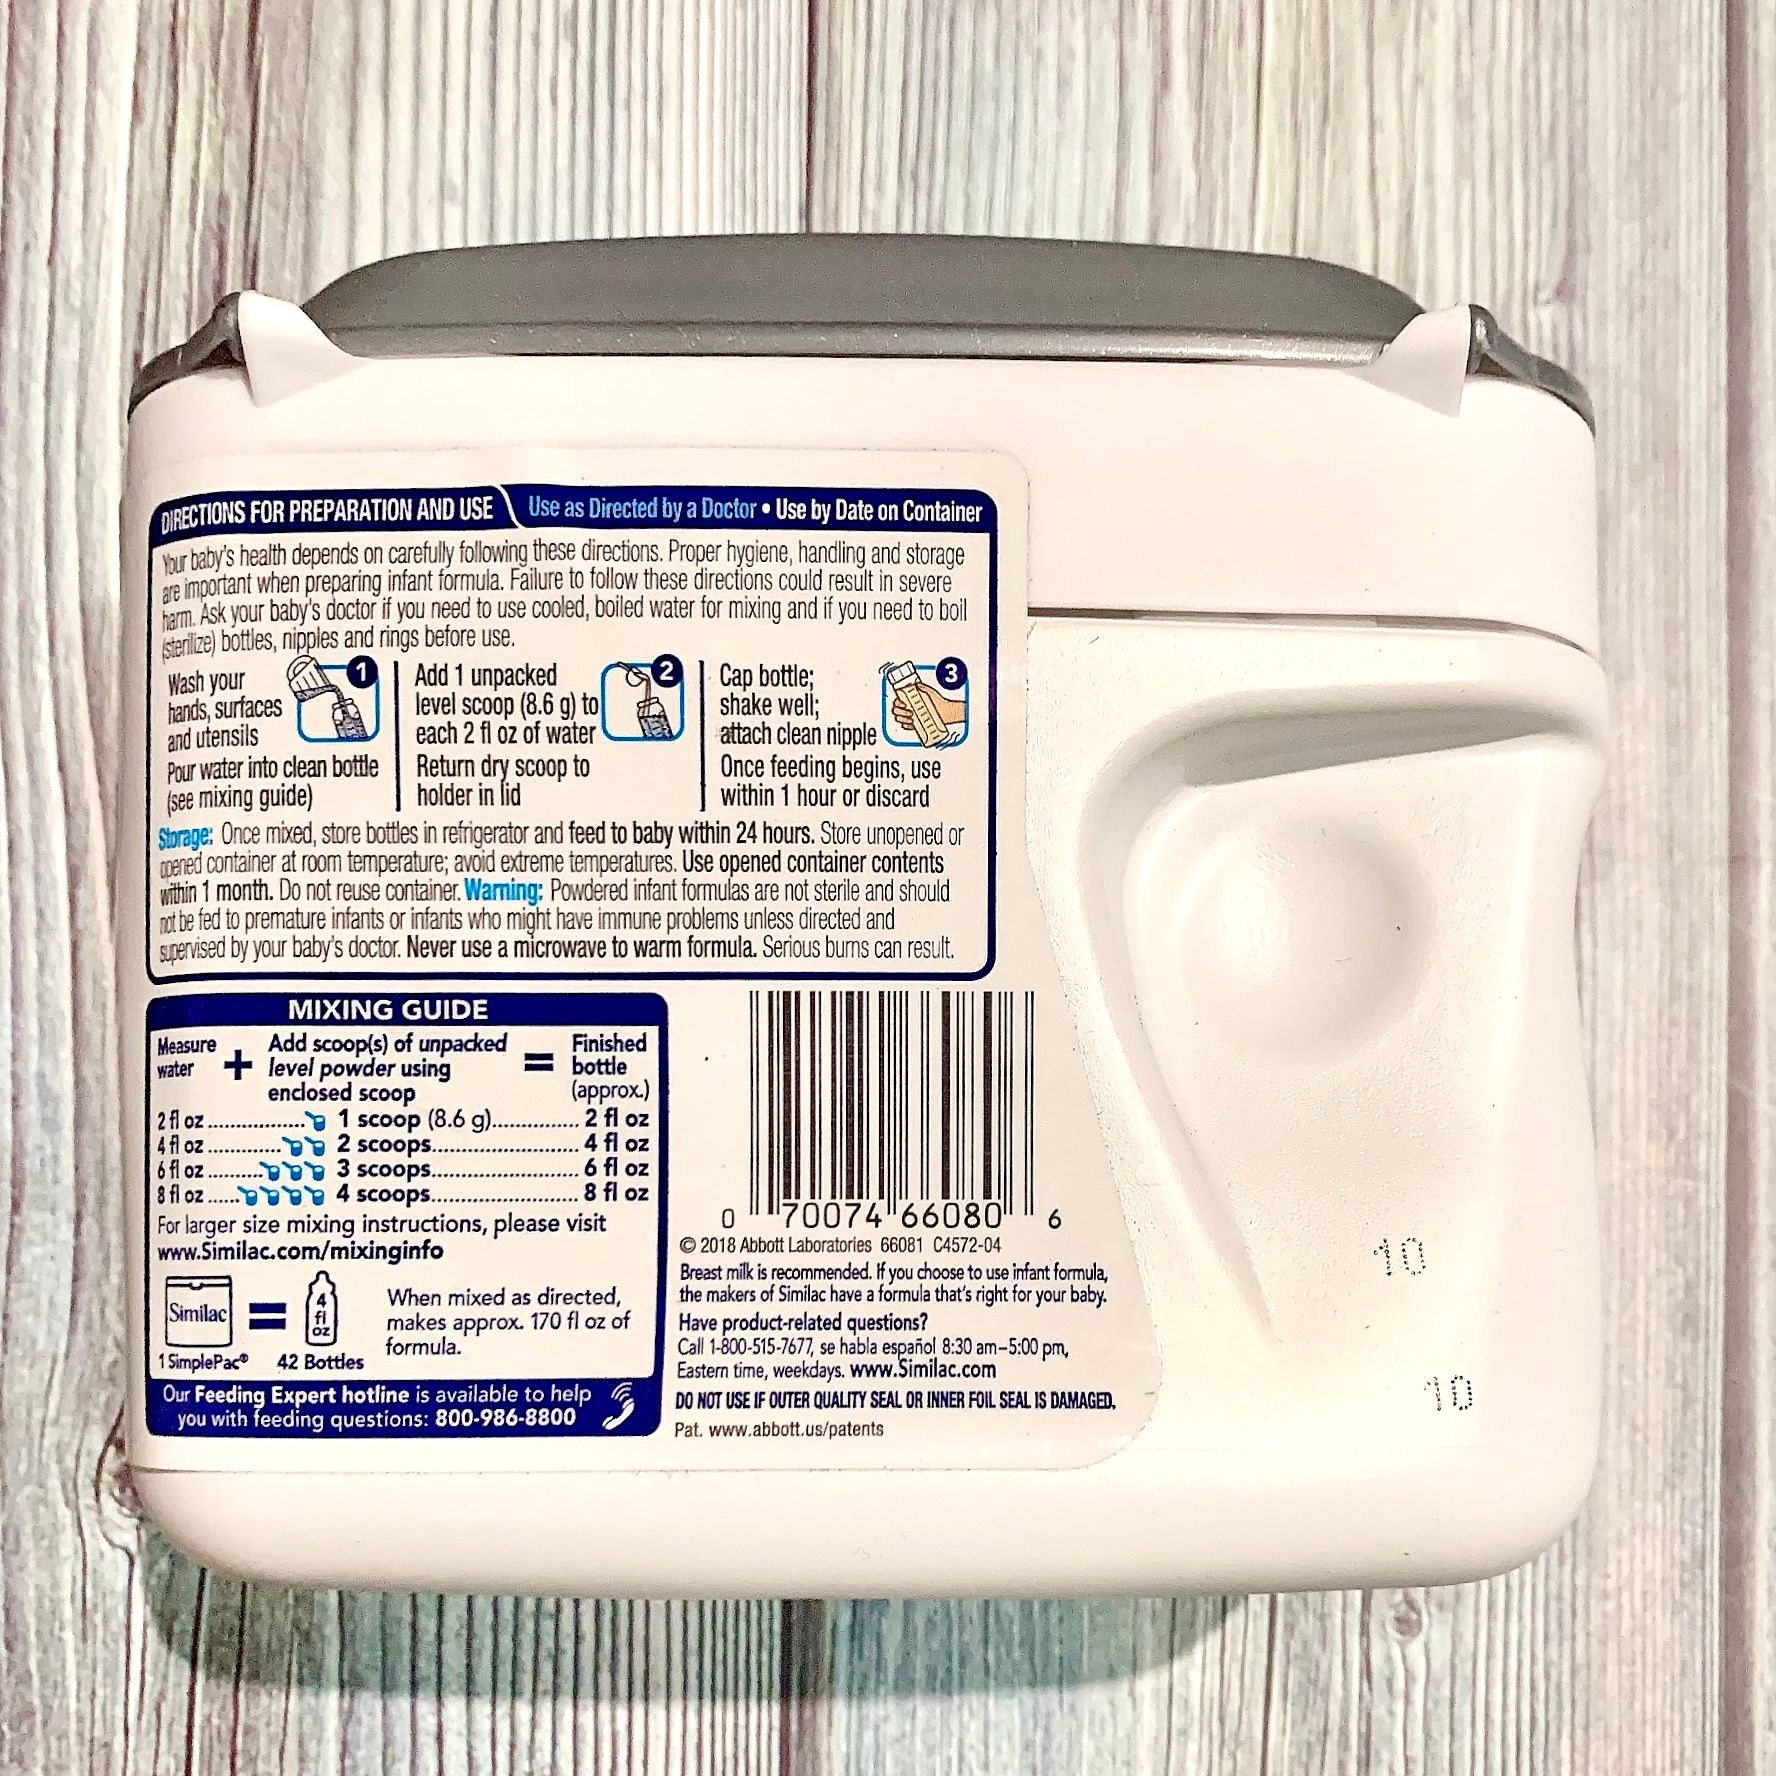  Sữa Similac Pro Advance NON GMO - HMO Từ 0-12 Tháng - 658g 